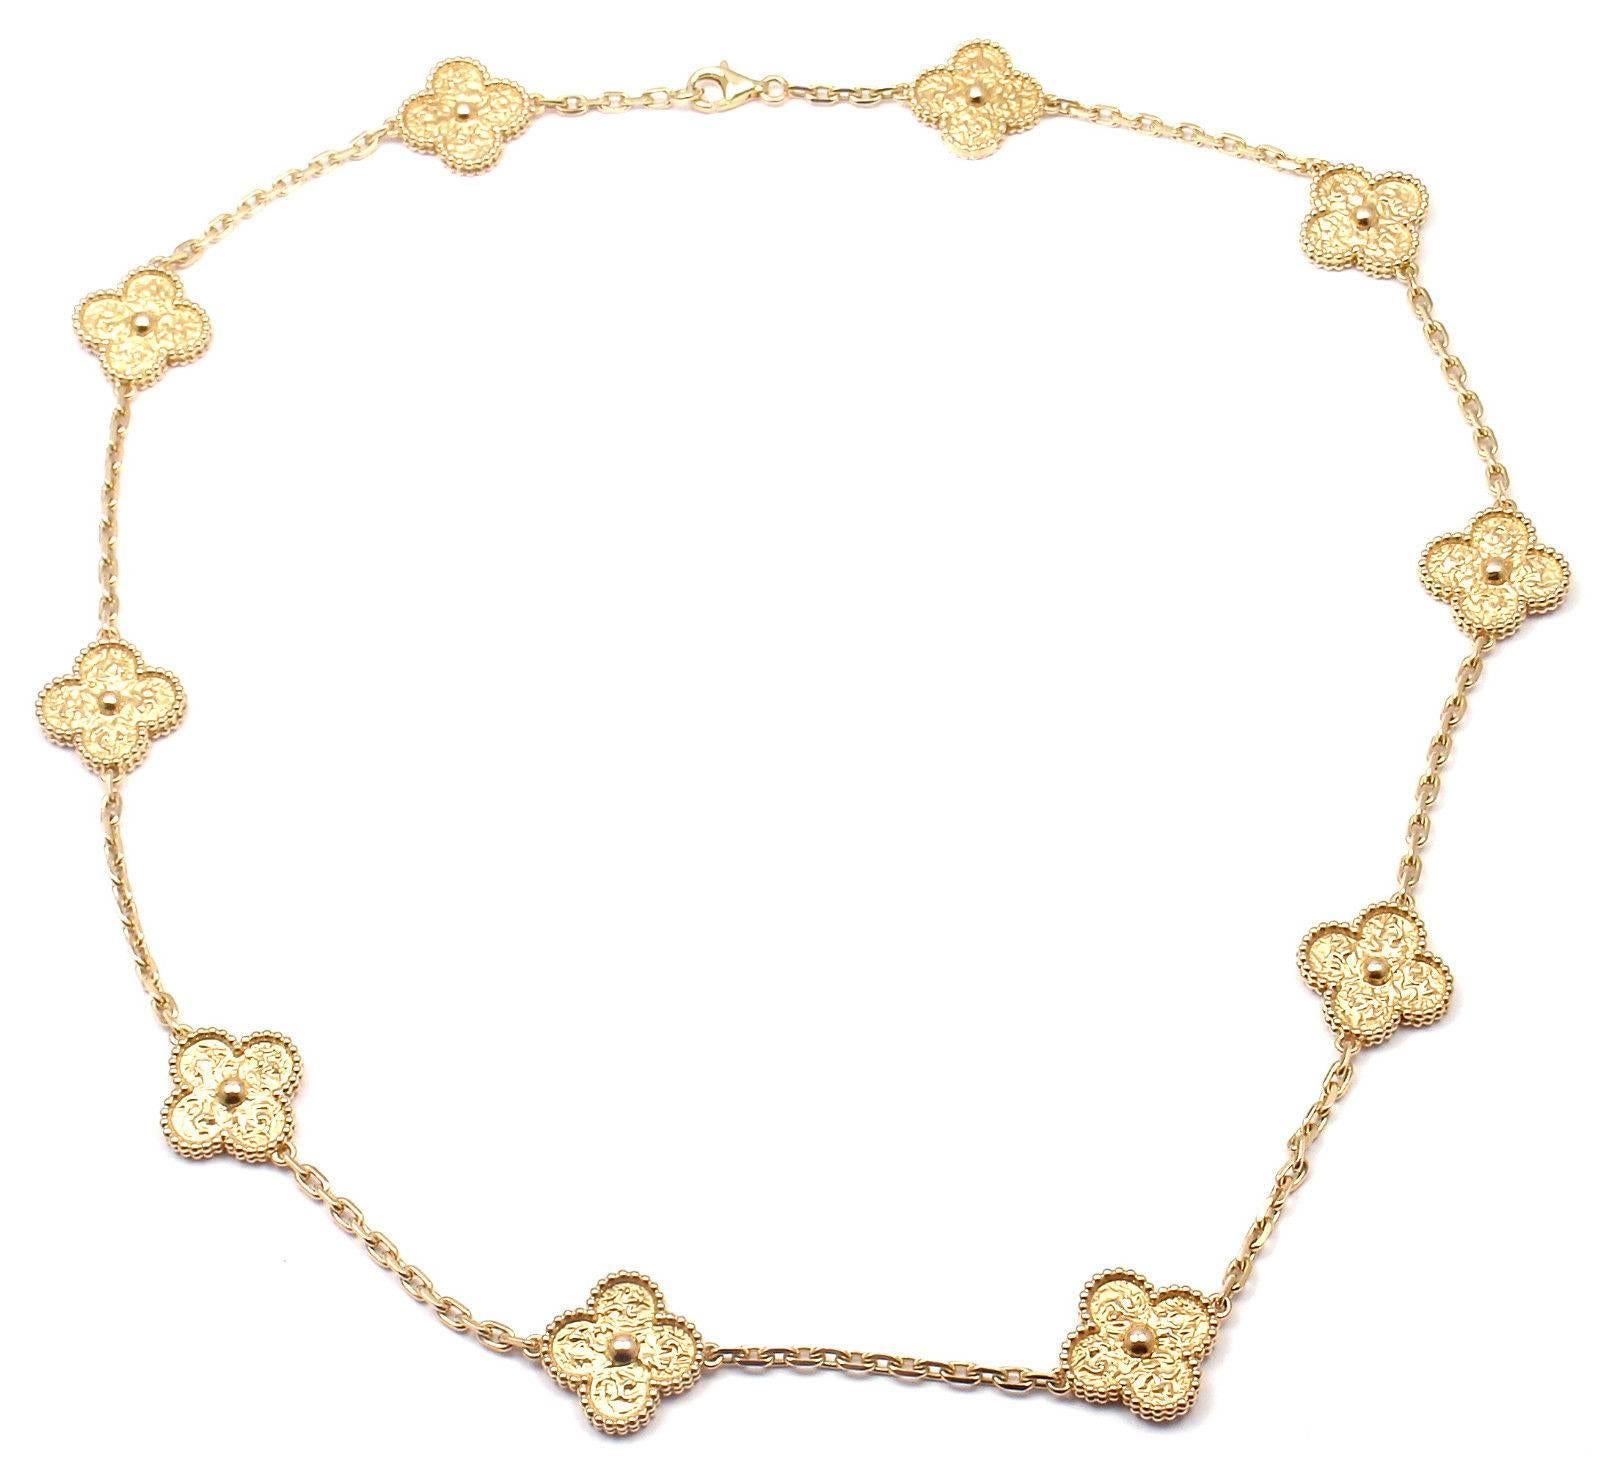 18k Yellow Gold Vintage Alhambra 10 Motif Necklace by Van Cleef & Arpels.

Details:
Length: 18.5